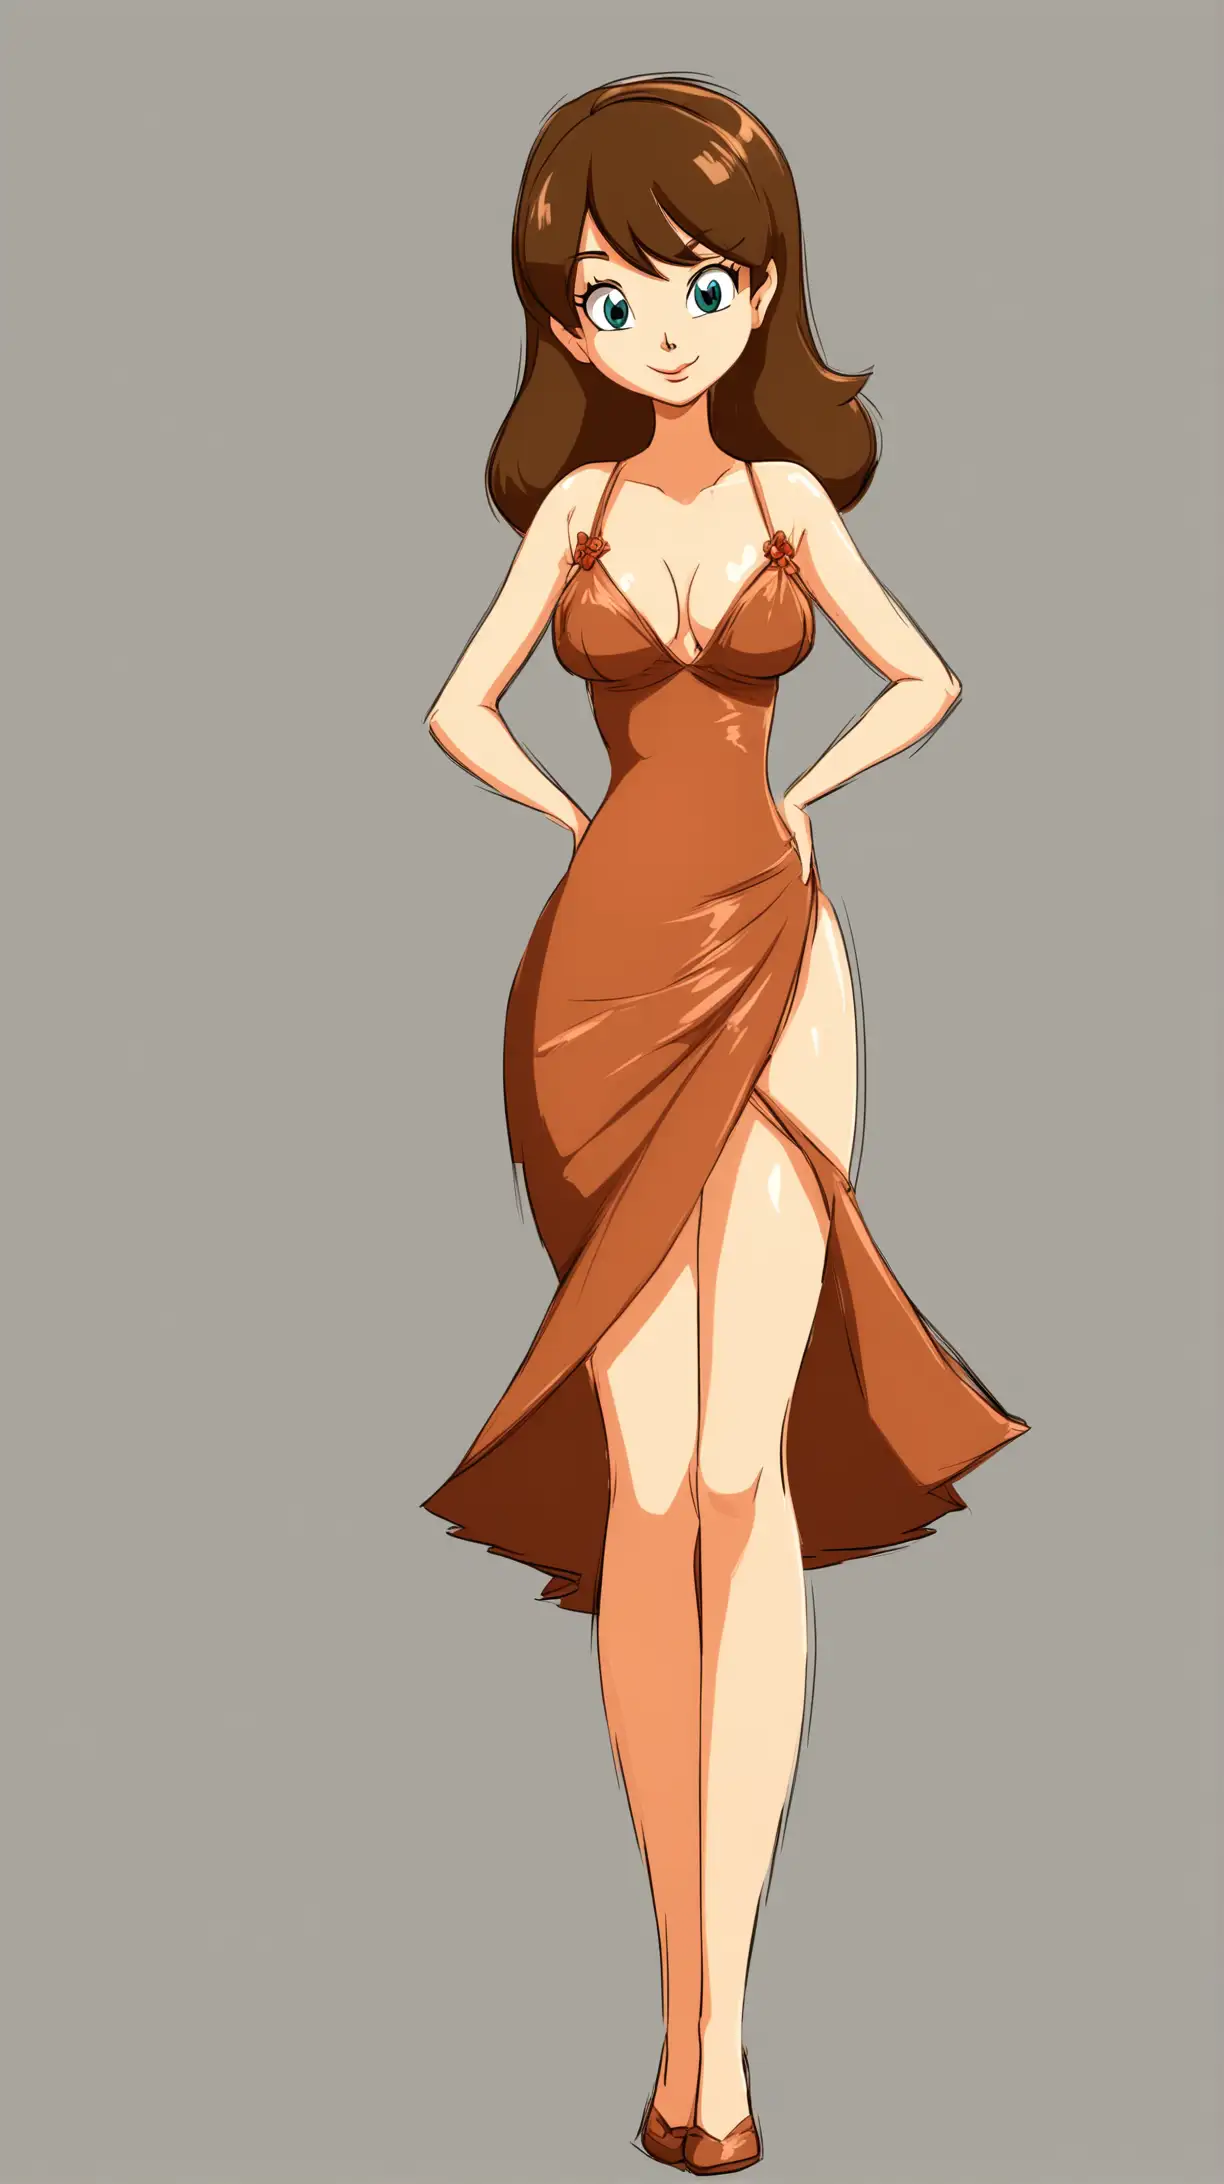 Colorful Cartoon Girl in Elegant Skimpy Dress on Simple Background